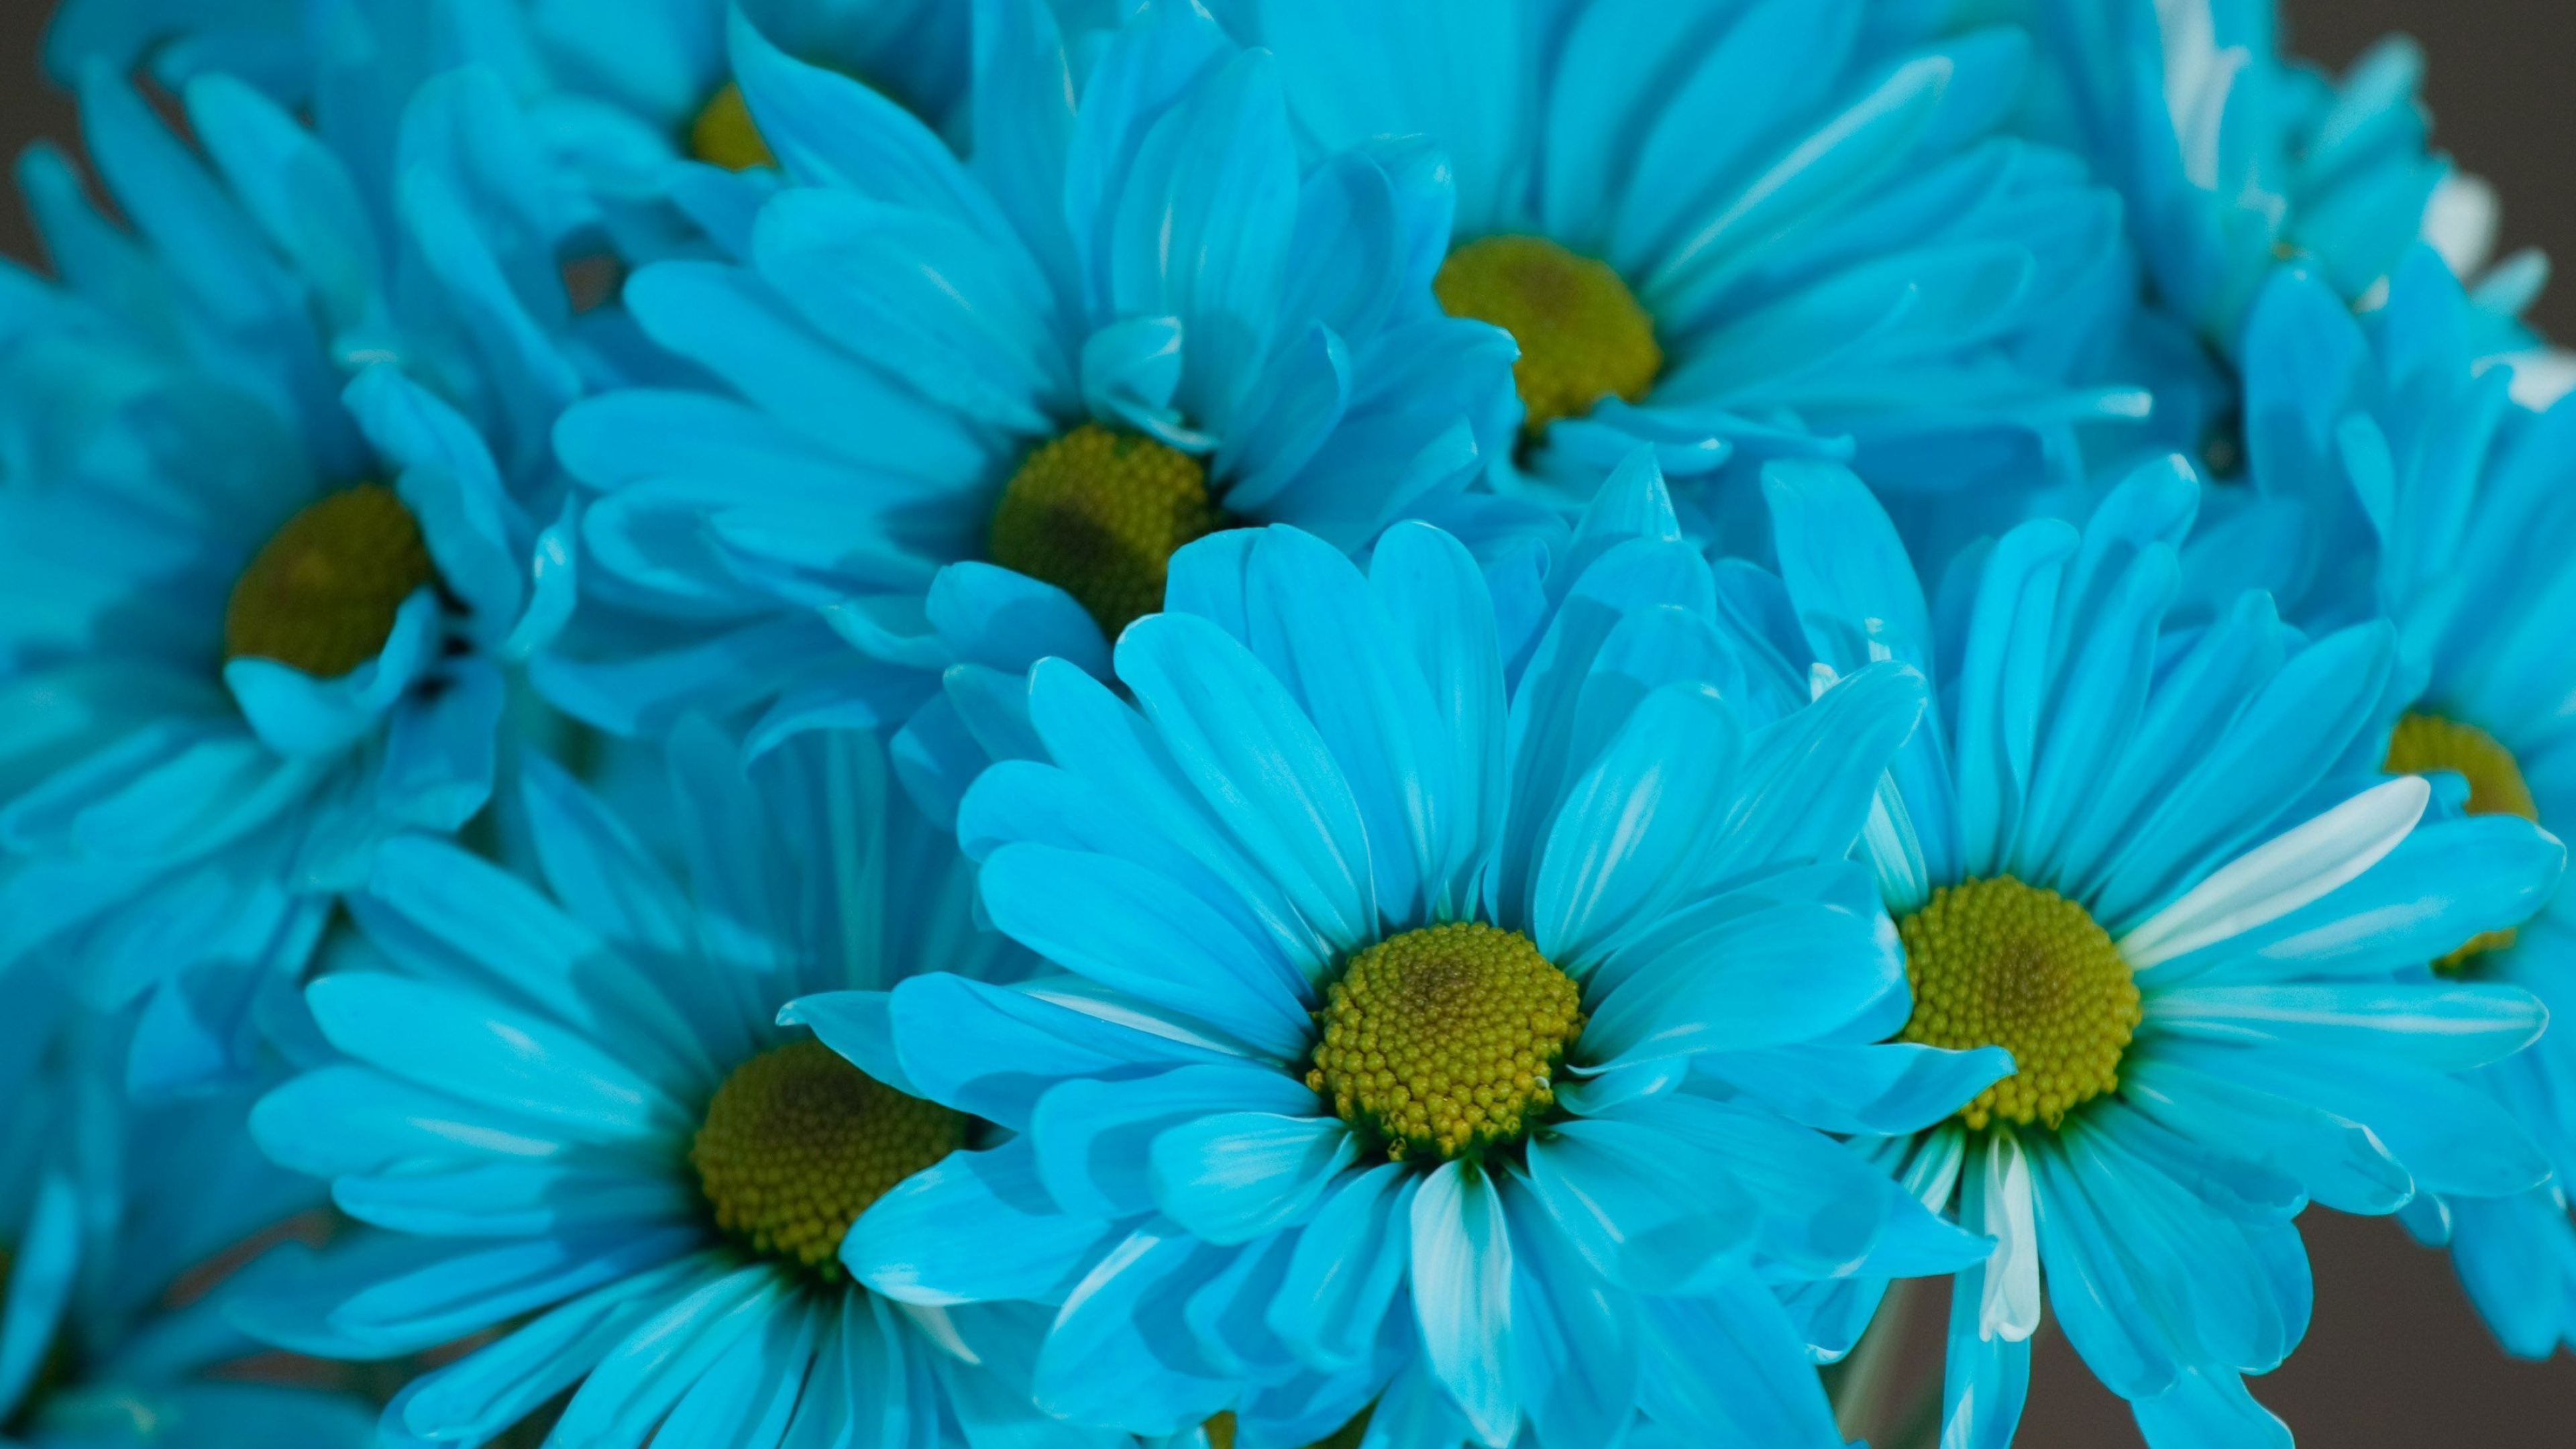 Gerbera Daisy: Blue Daisies, Gerbera flowers, South Carolina, South Africa. 3840x2160 4K Wallpaper.